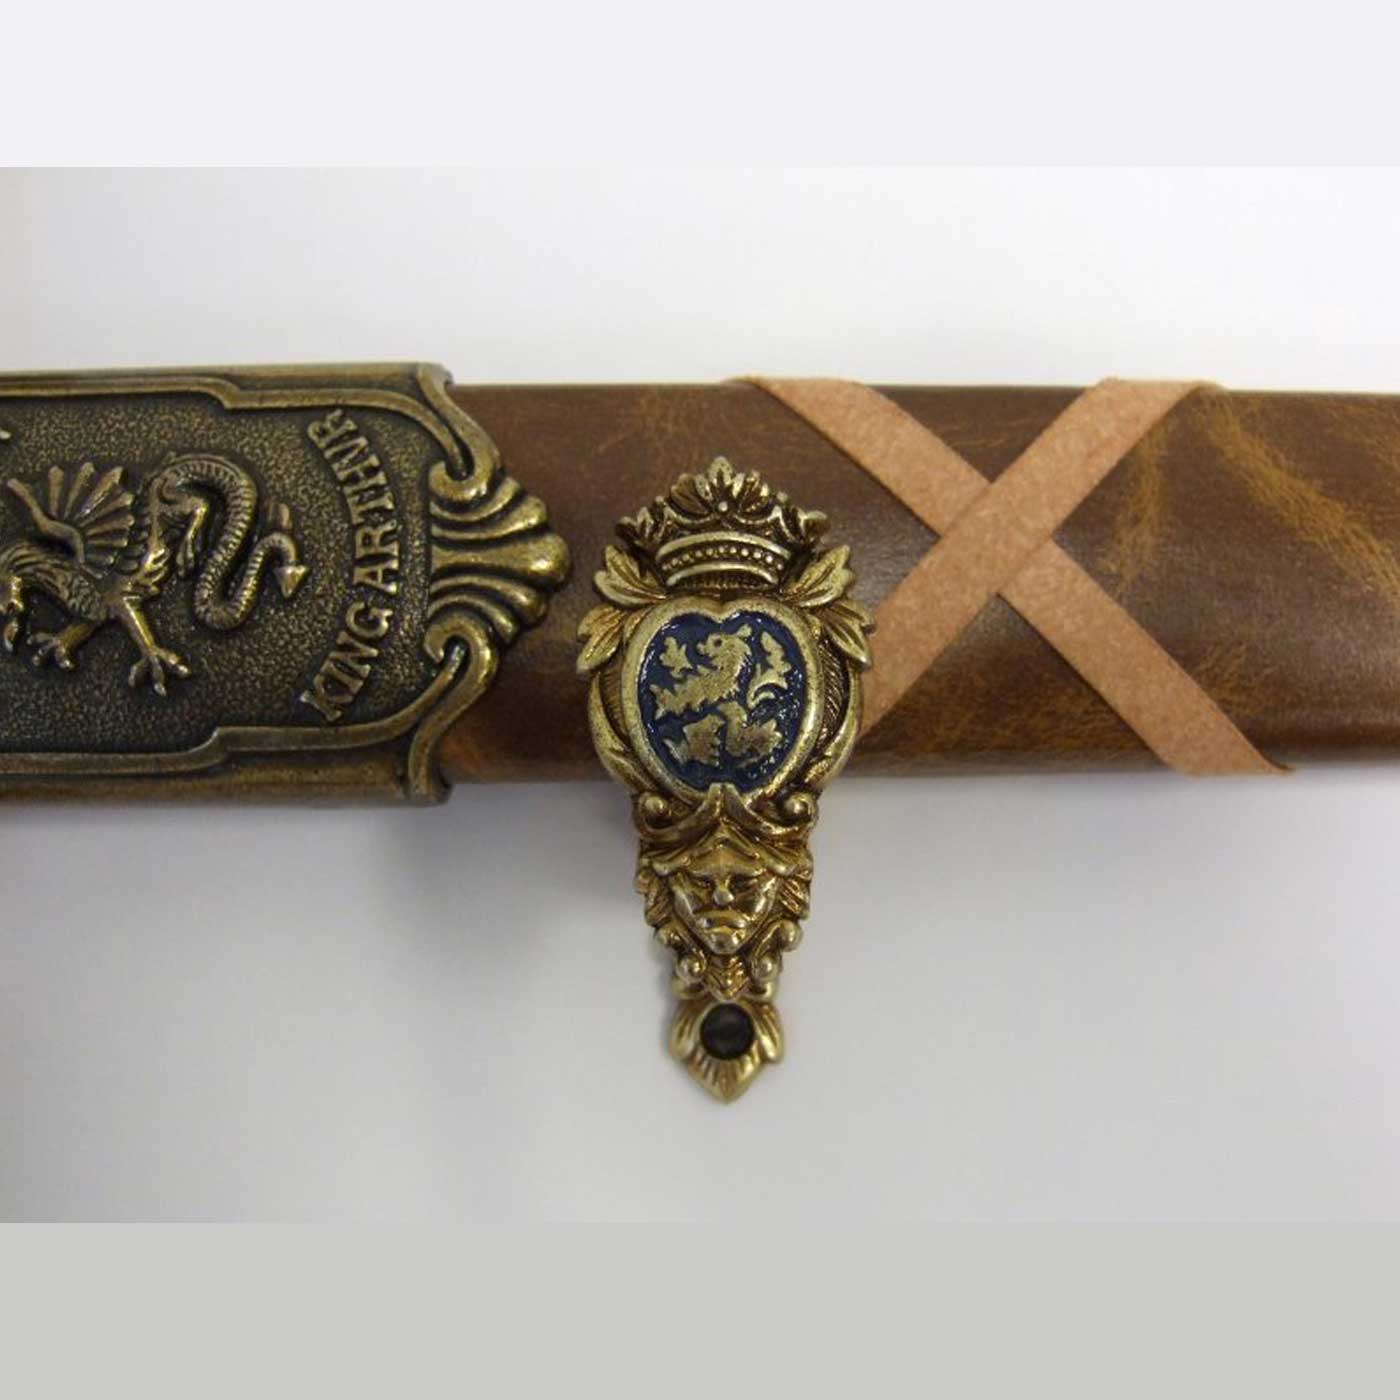 denix-excalibur-espada-legendaria-del-rey-arturo-4123-(8)